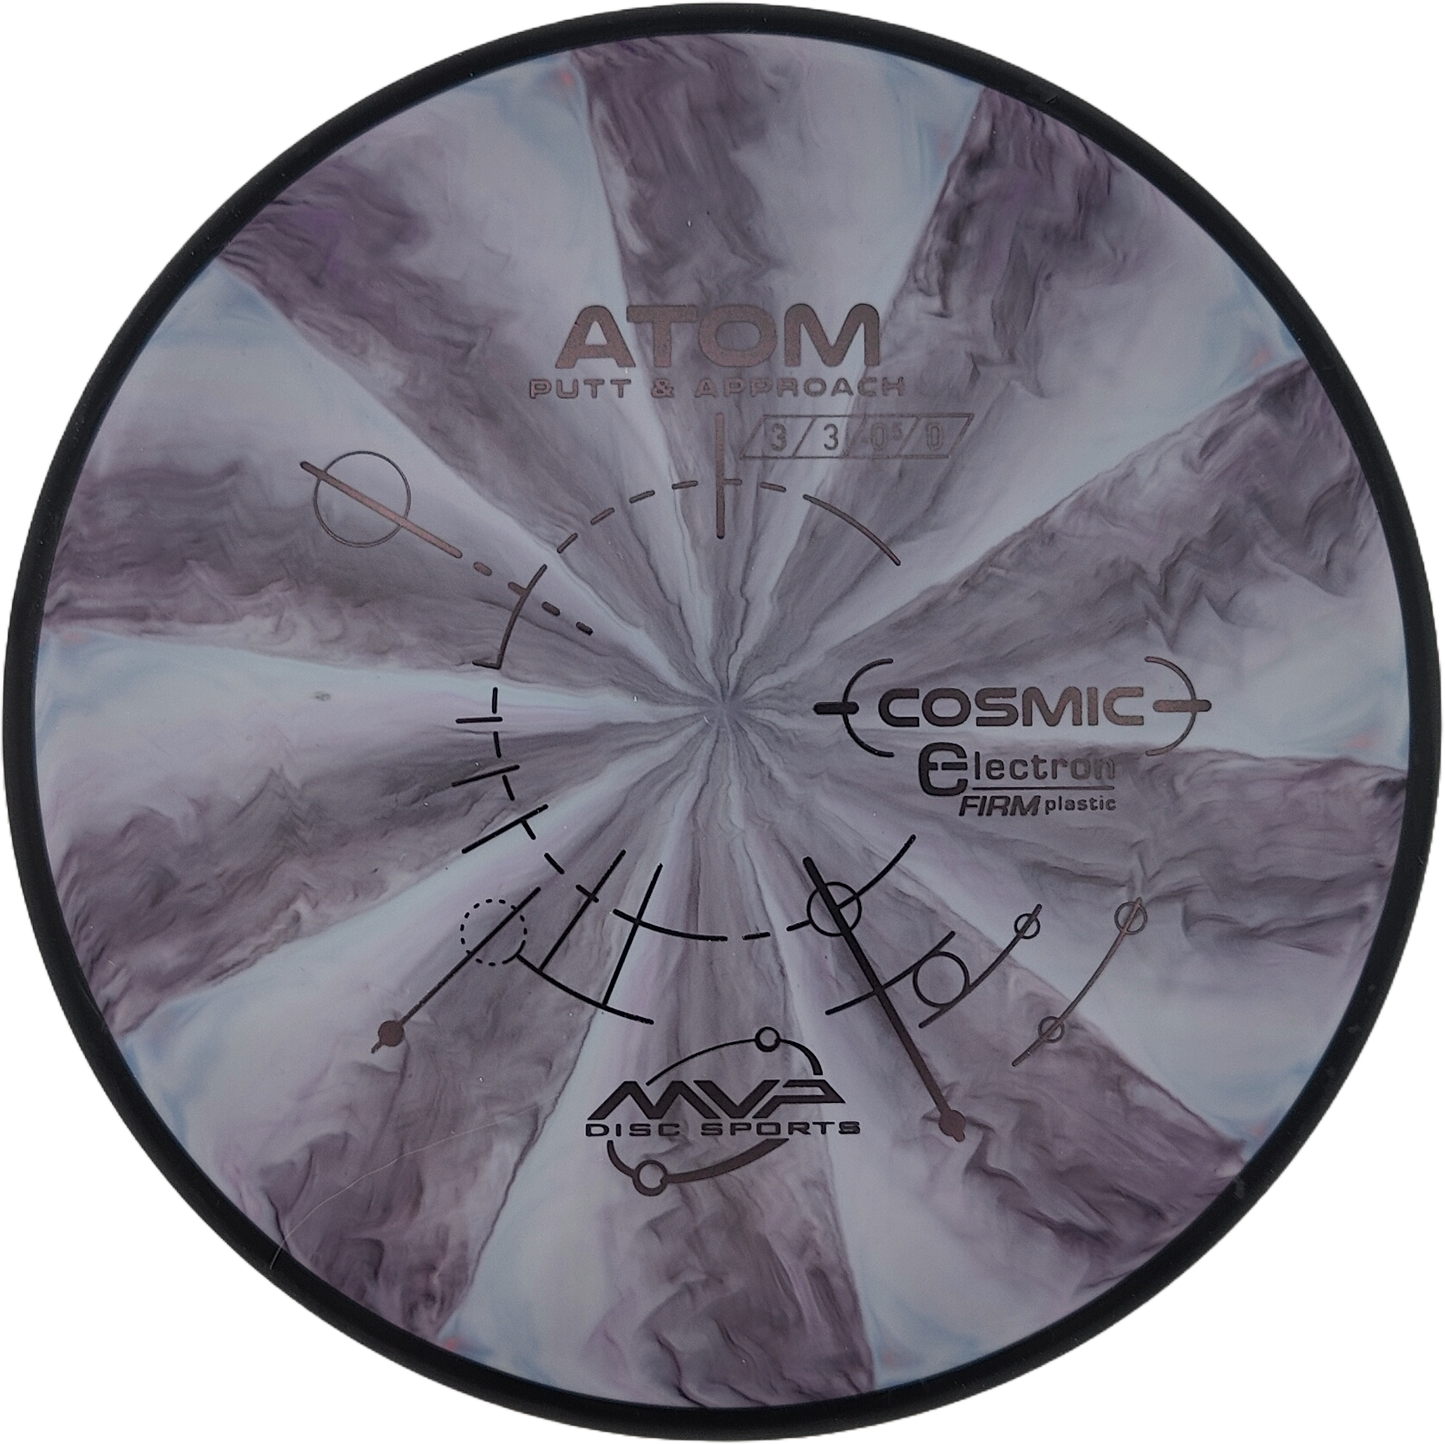 MVP Atom Cosmic Electron Firm